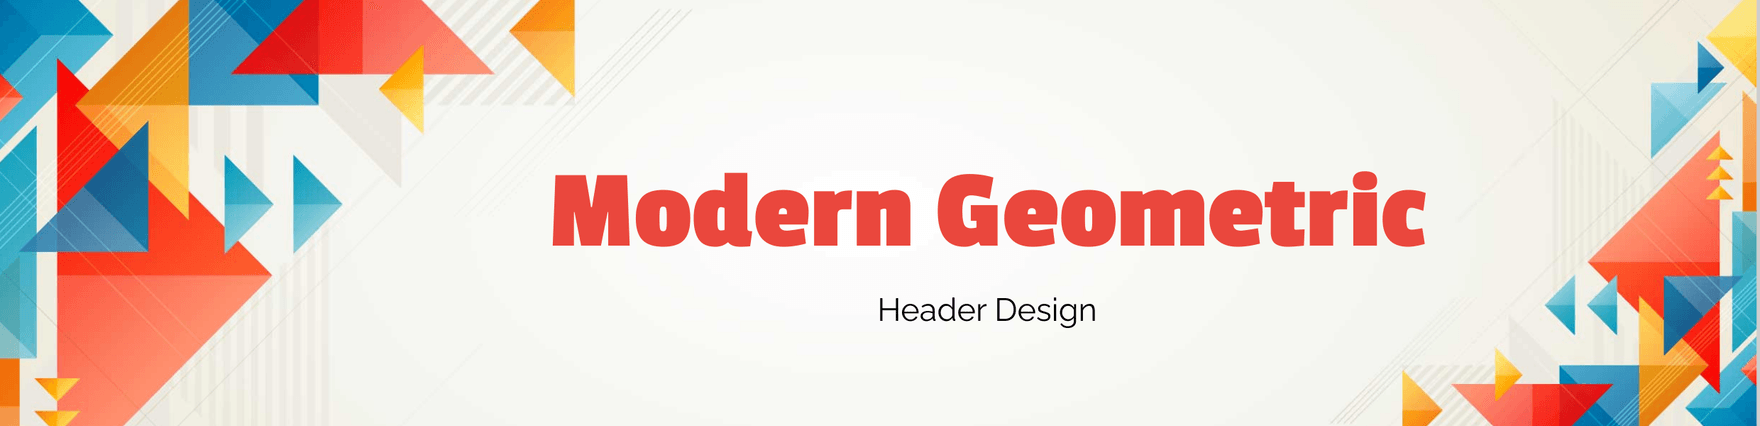 Modern Geometric Header Design Template